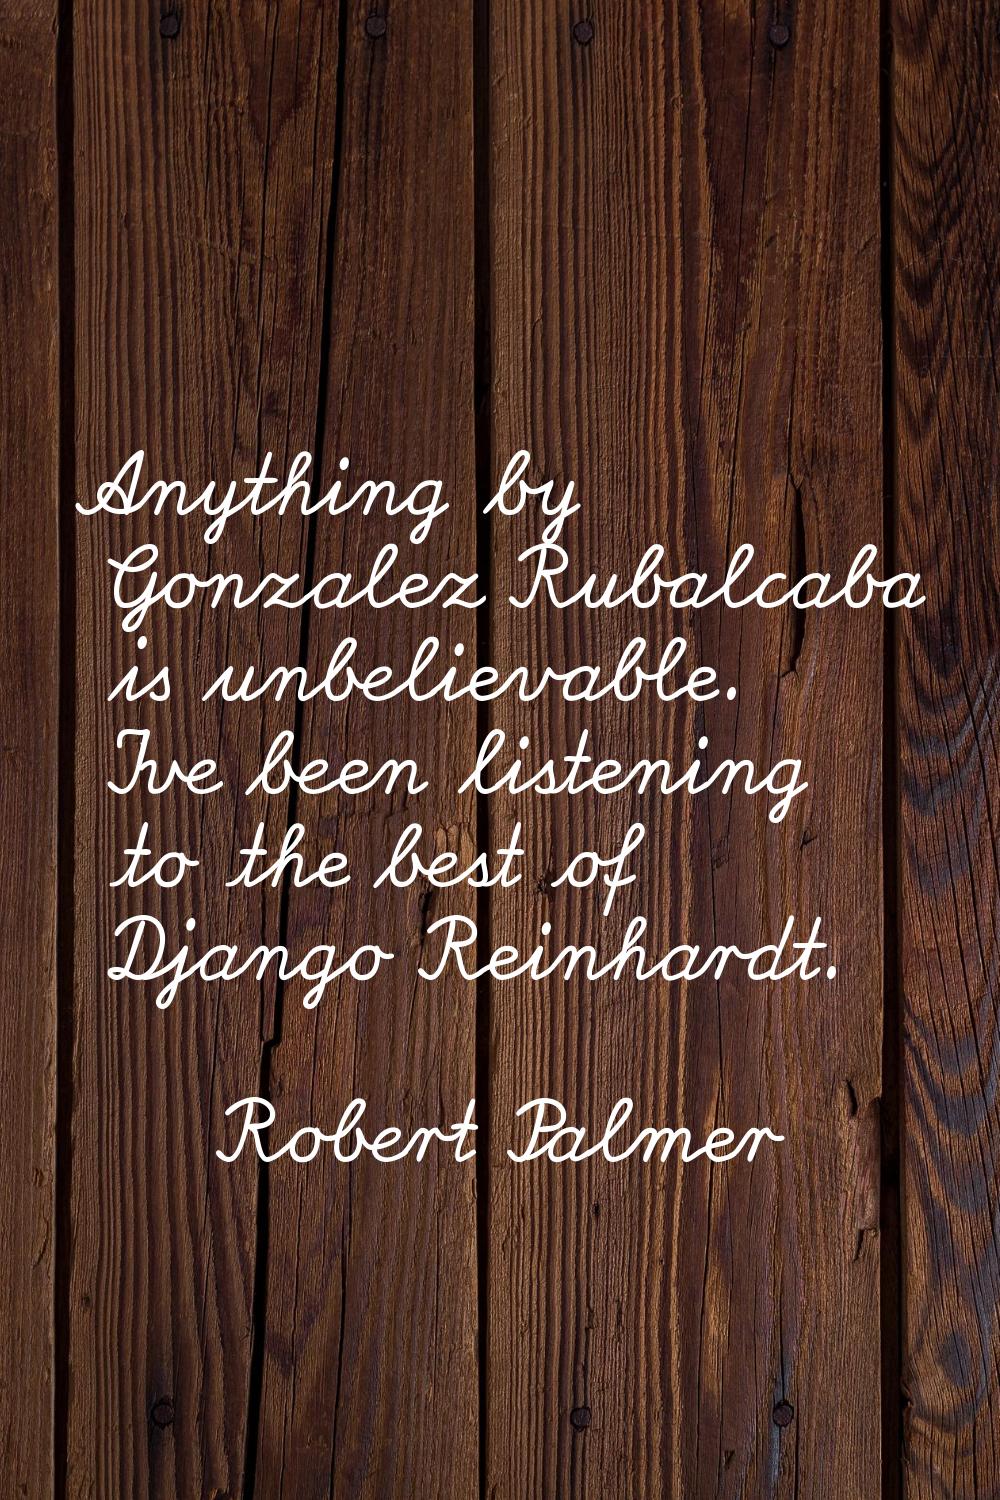 Anything by Gonzalez Rubalcaba is unbelievable. I've been listening to the best of Django Reinhardt